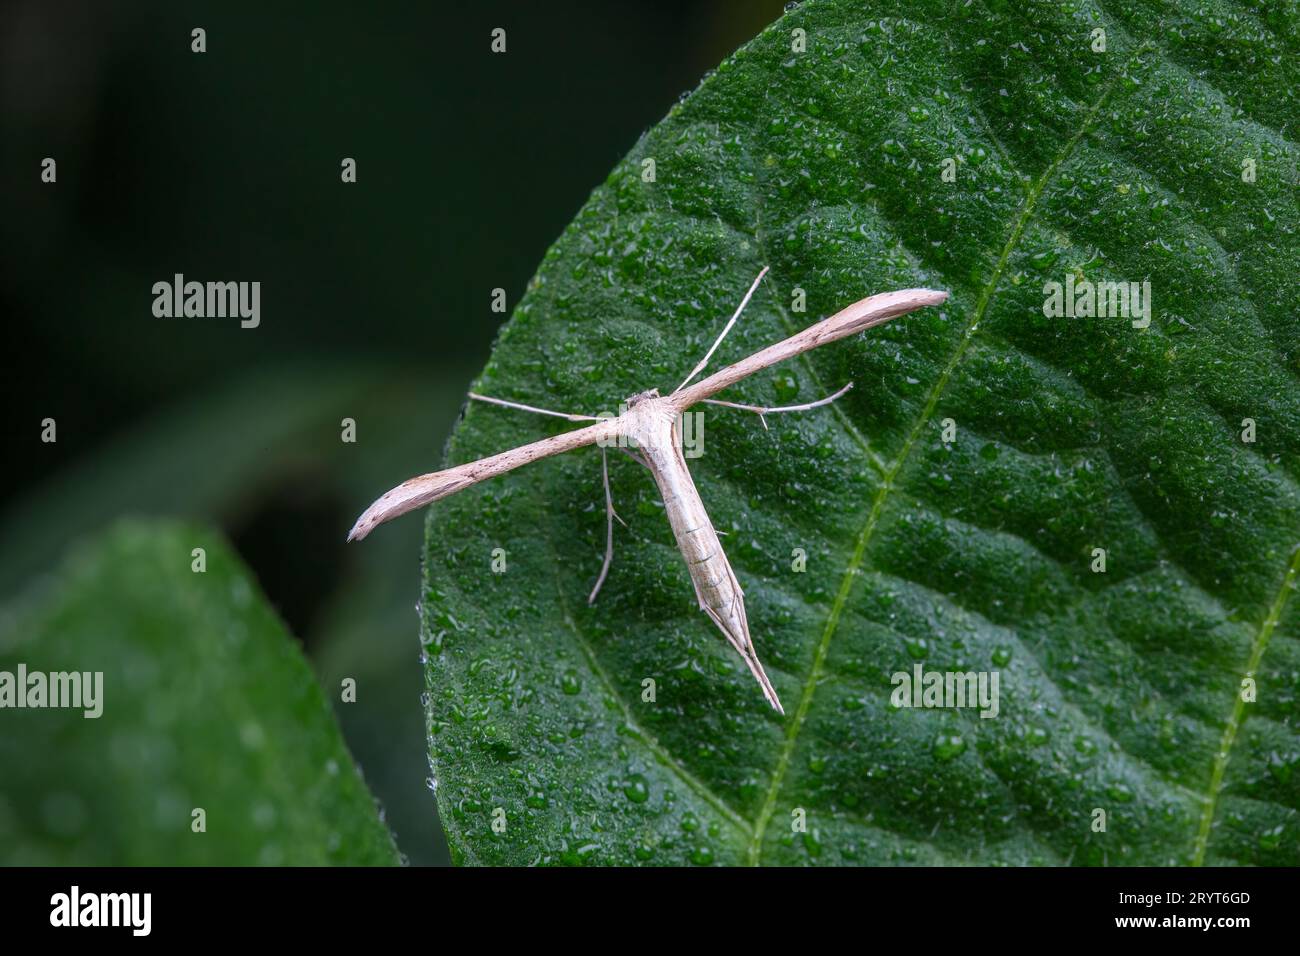 Plume Moth on wild plant leaves Stock Photo